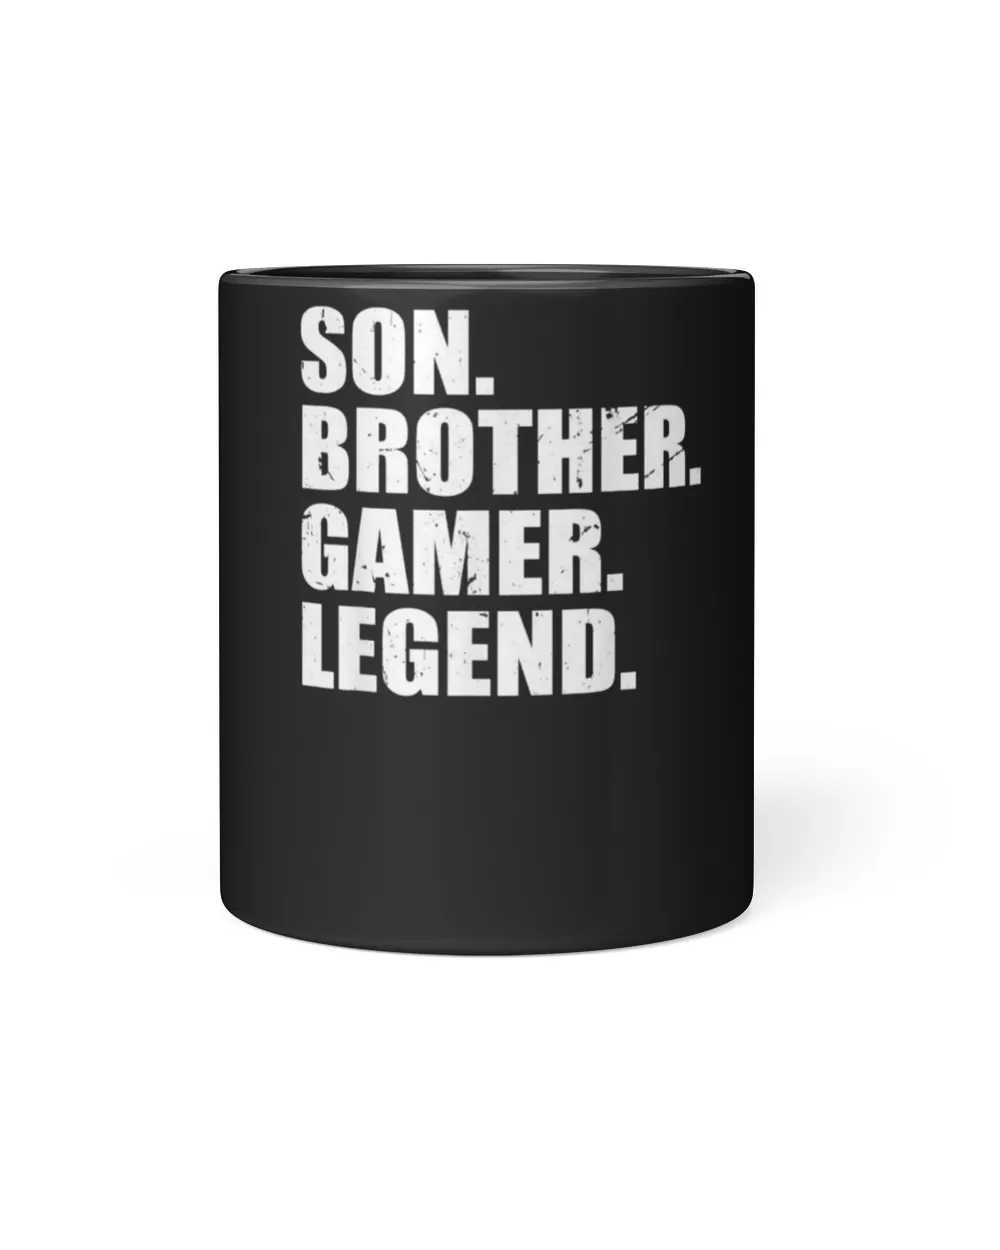 Son Brother Gamer Legend Funny Shirt